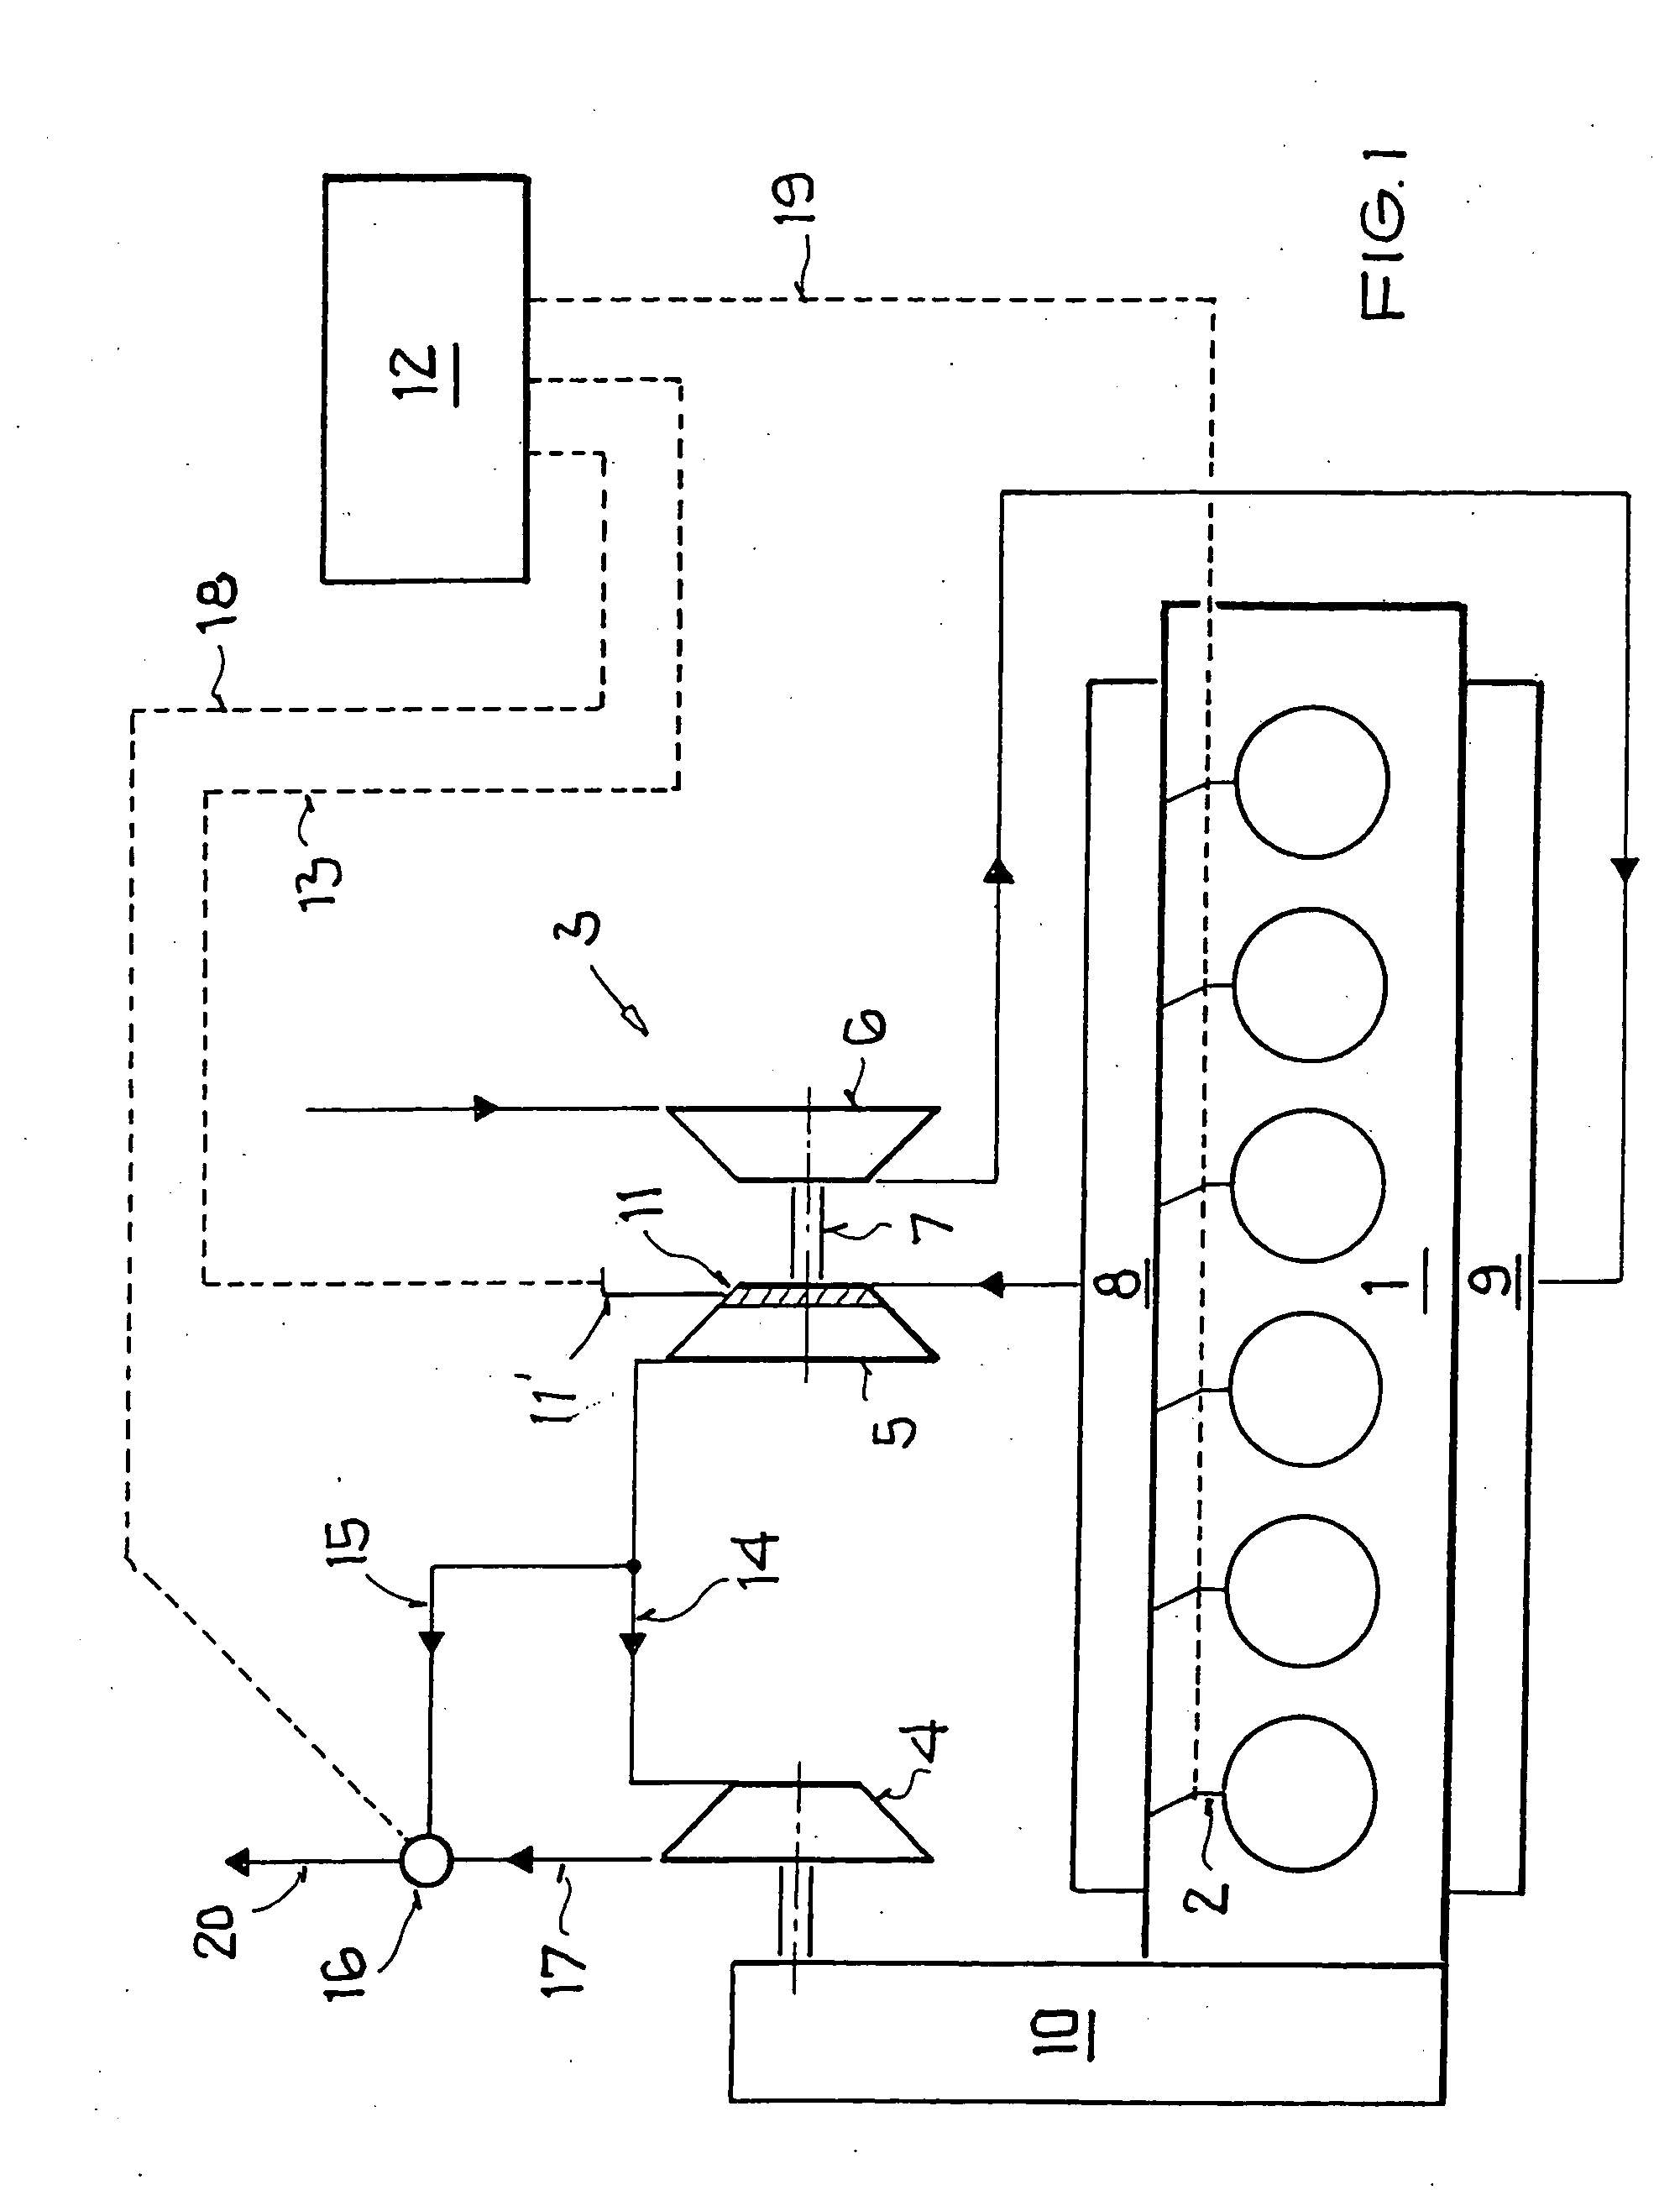 Internal combustion engine comprising an engine braking arrangement